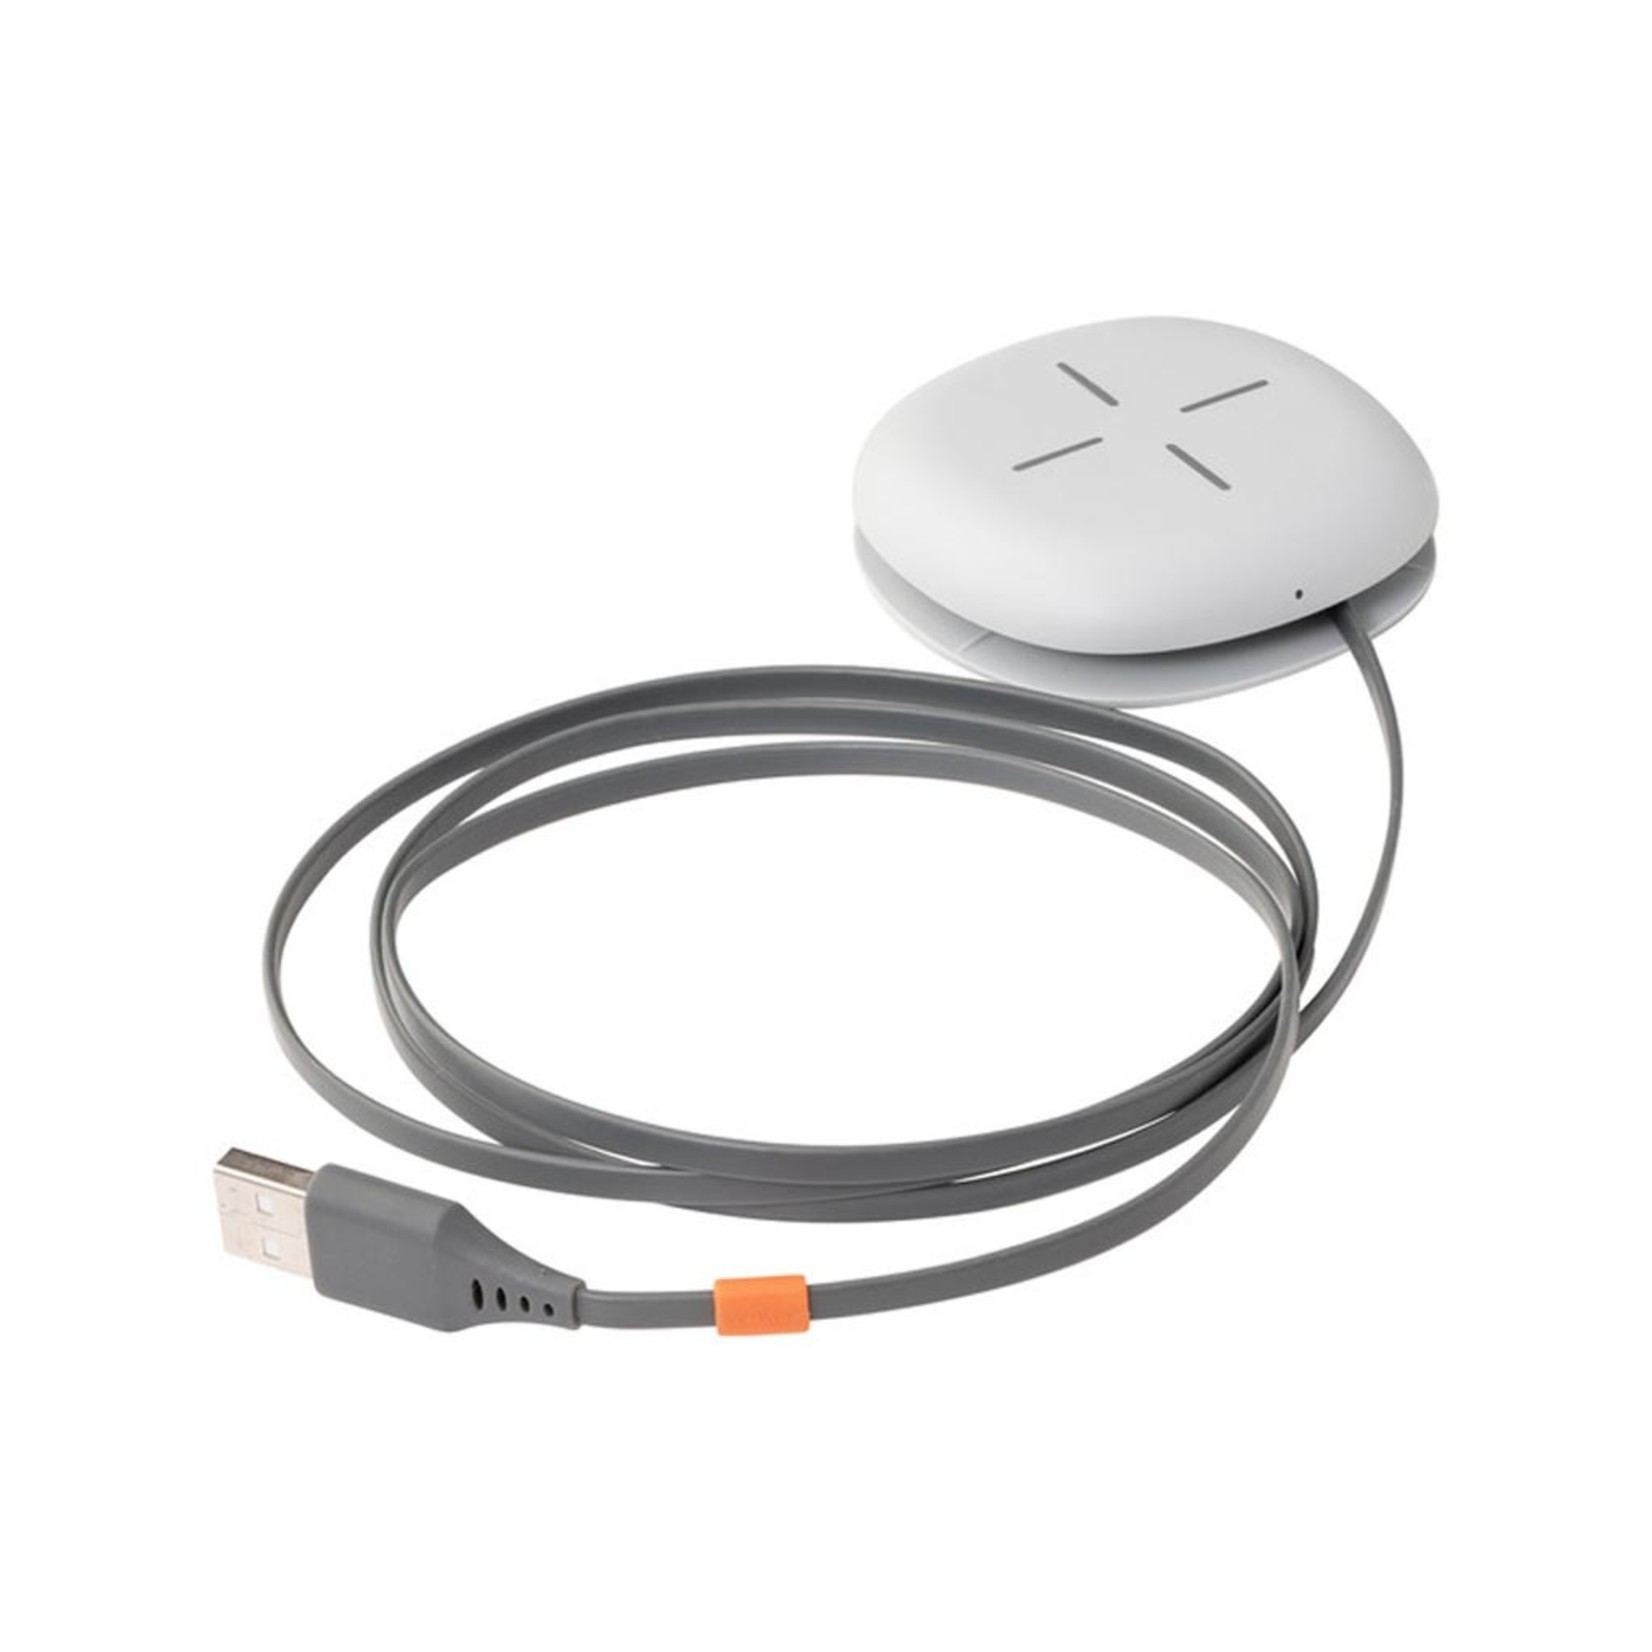 VENTEV | Wireless Chargewrap Mini